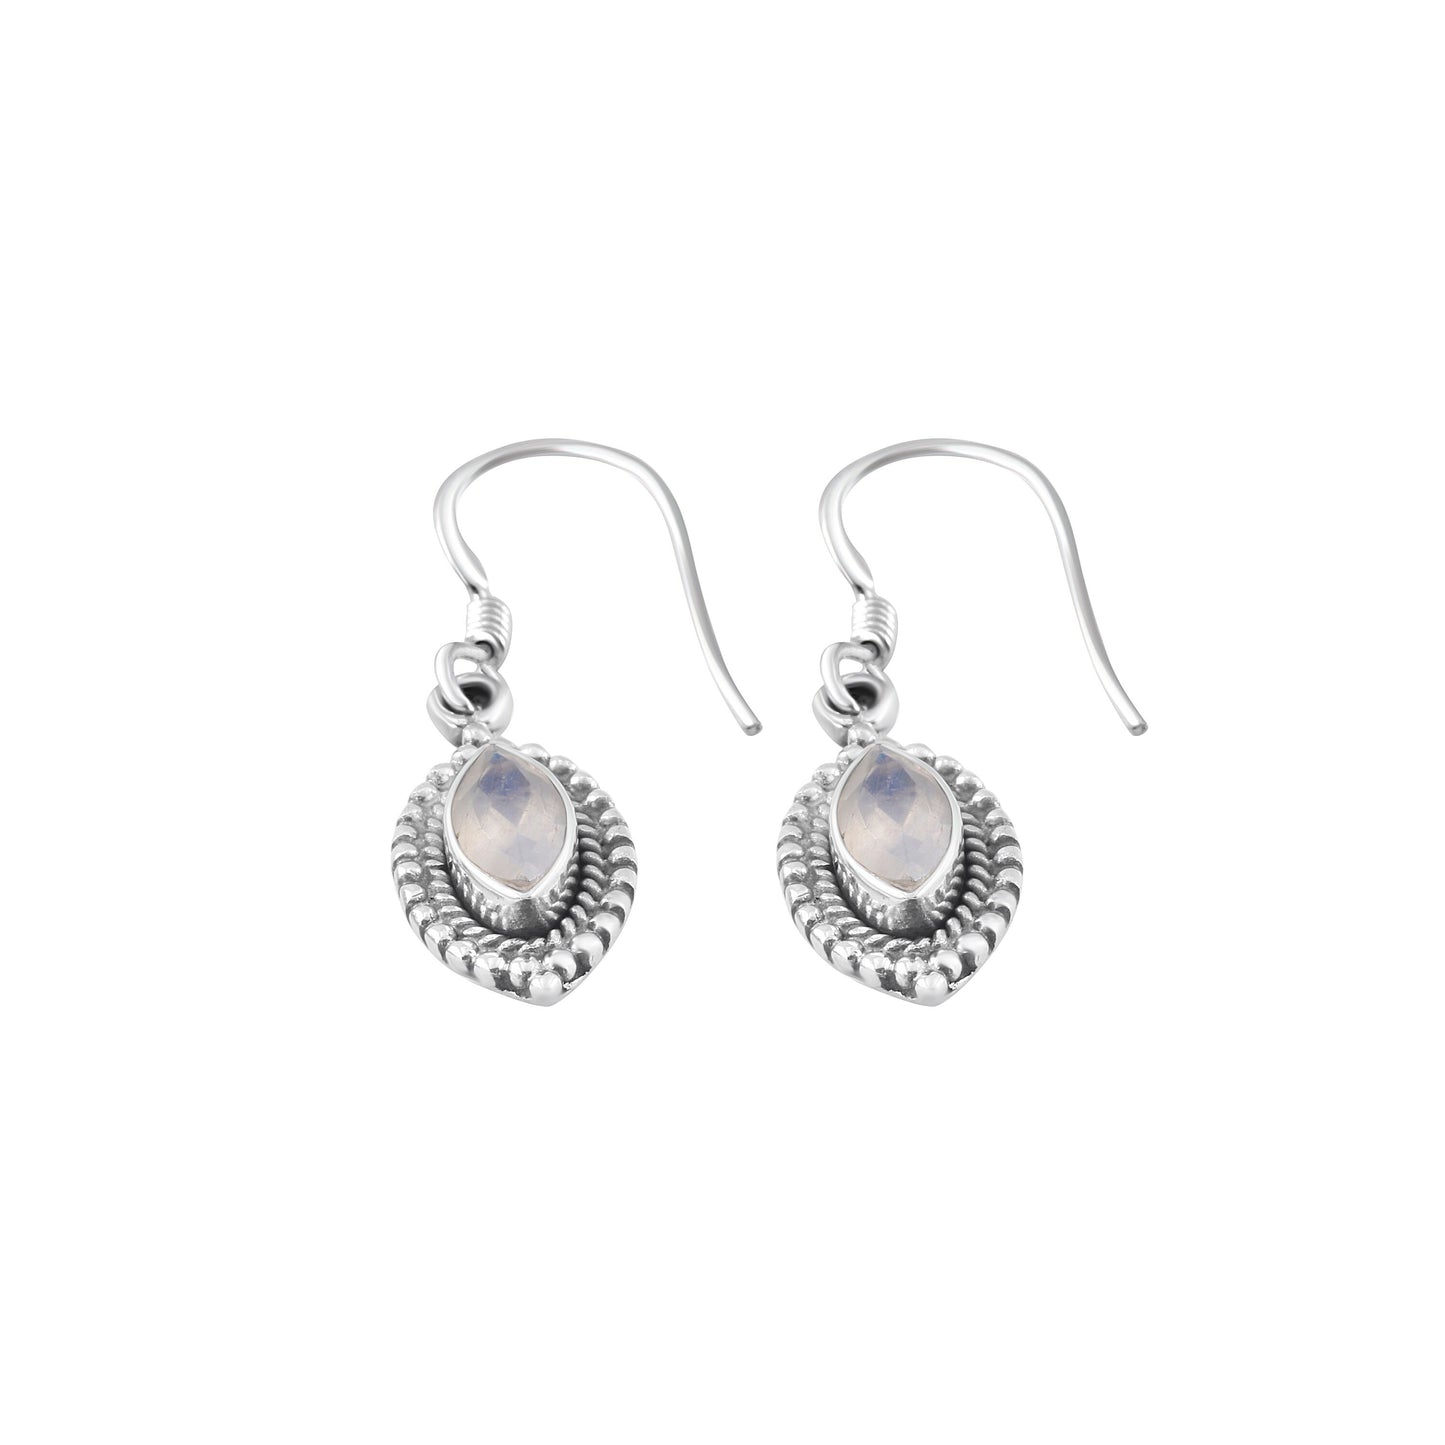 Genuine marquise shaped MOONSTONE Gemstones Oxidized Silver Earrings, 925 SILVER earrings, Cancer Zodiac July birthstone gift, Australia, Zorbajewellers